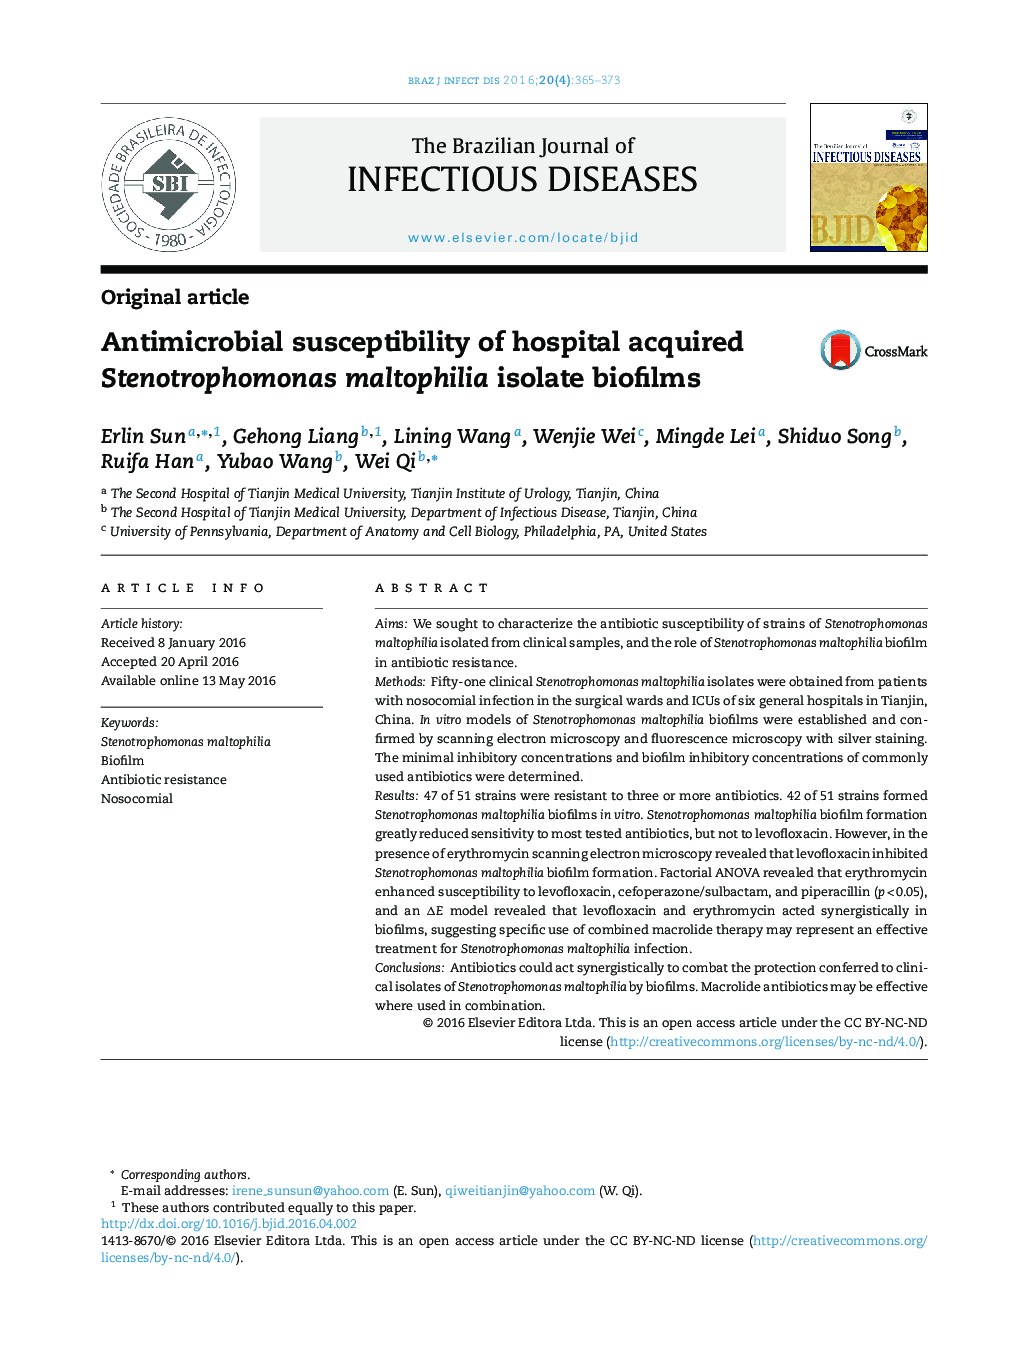 Antimicrobial susceptibility of hospital acquired Stenotrophomonas maltophilia isolate biofilms